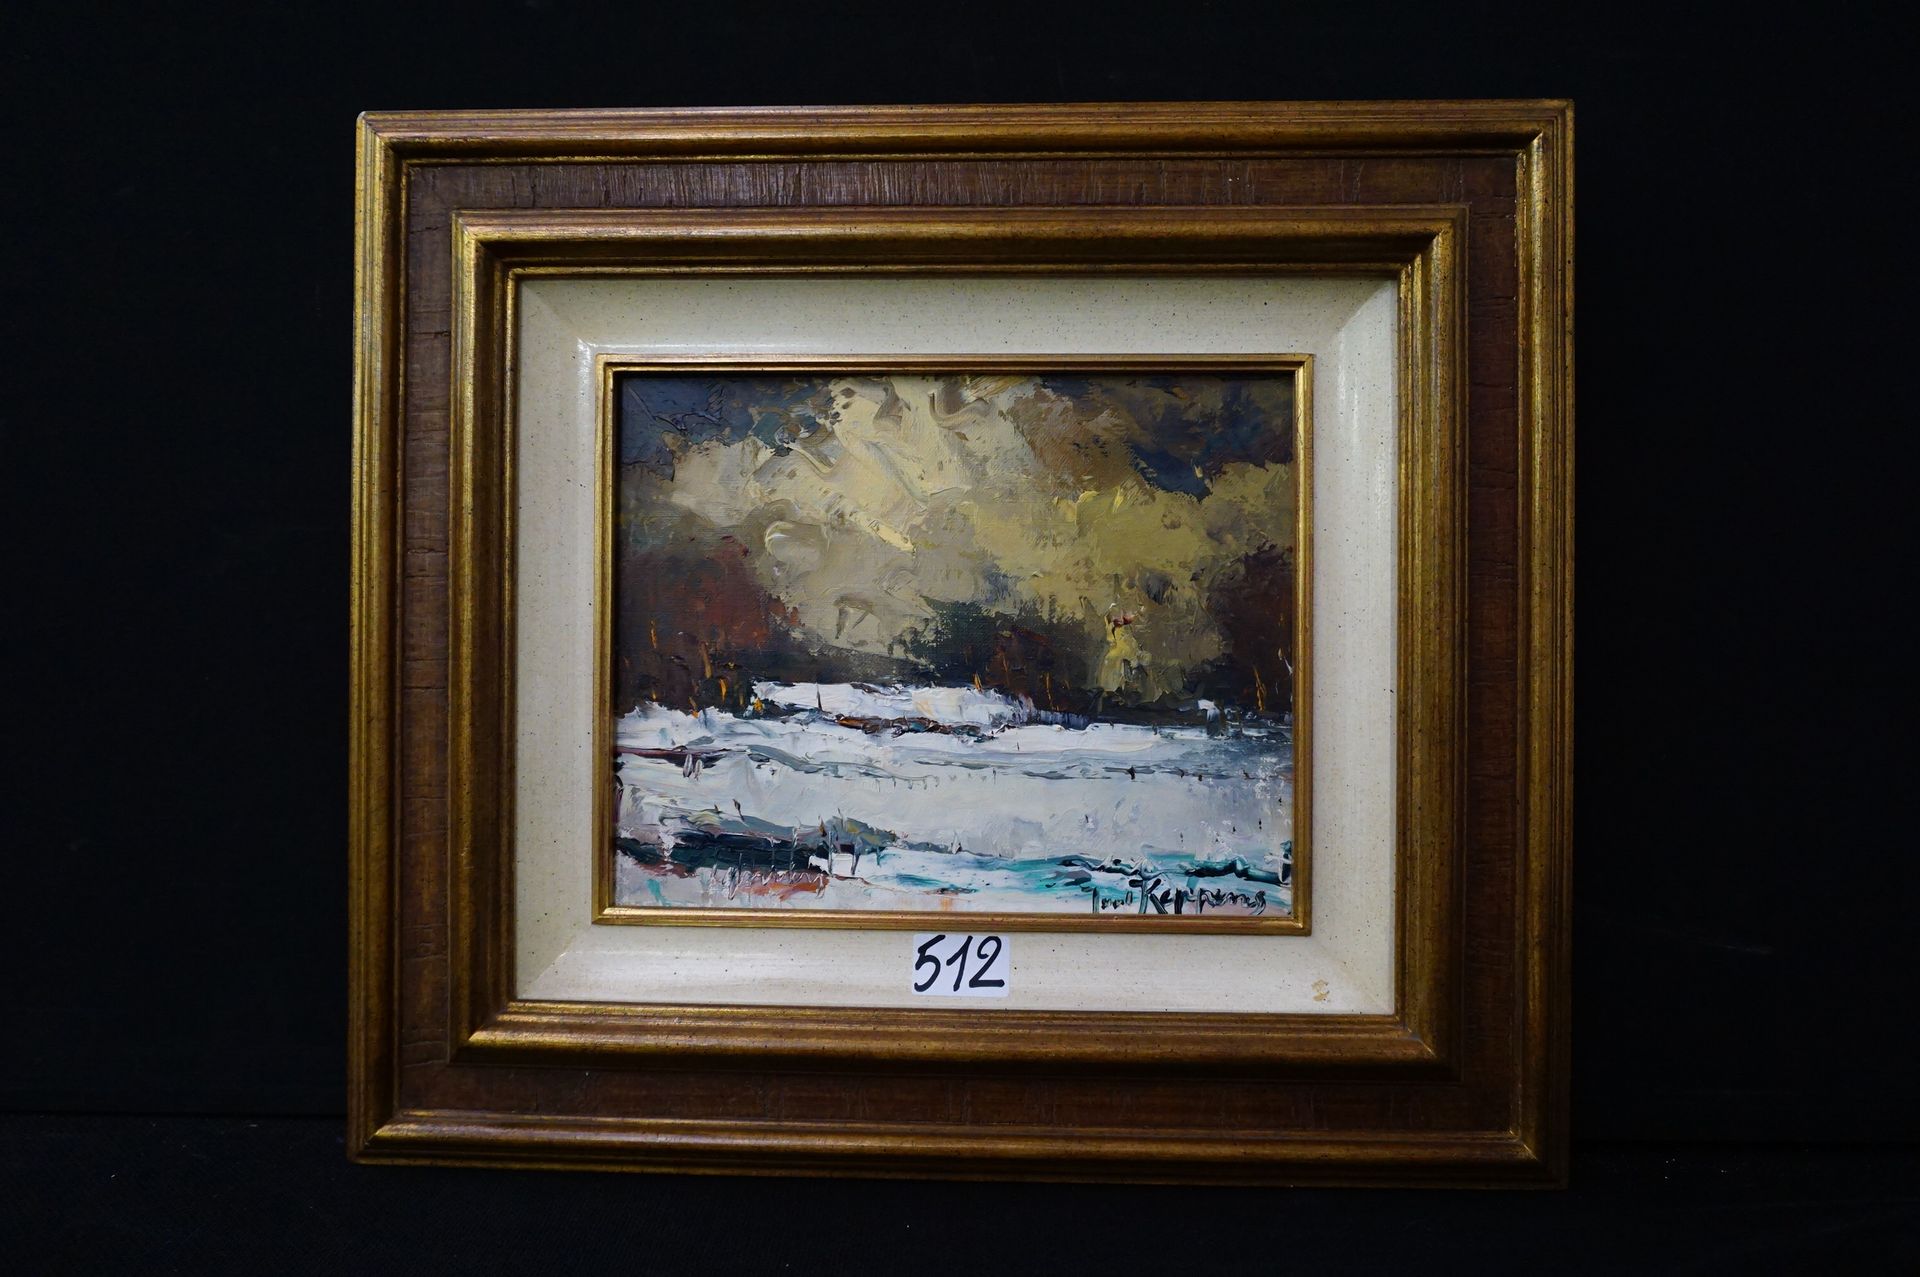 JUUL KEPPENS (1910 - 1992) "雪景" - 布面油画 - 已签名 - 24 x 30 cm